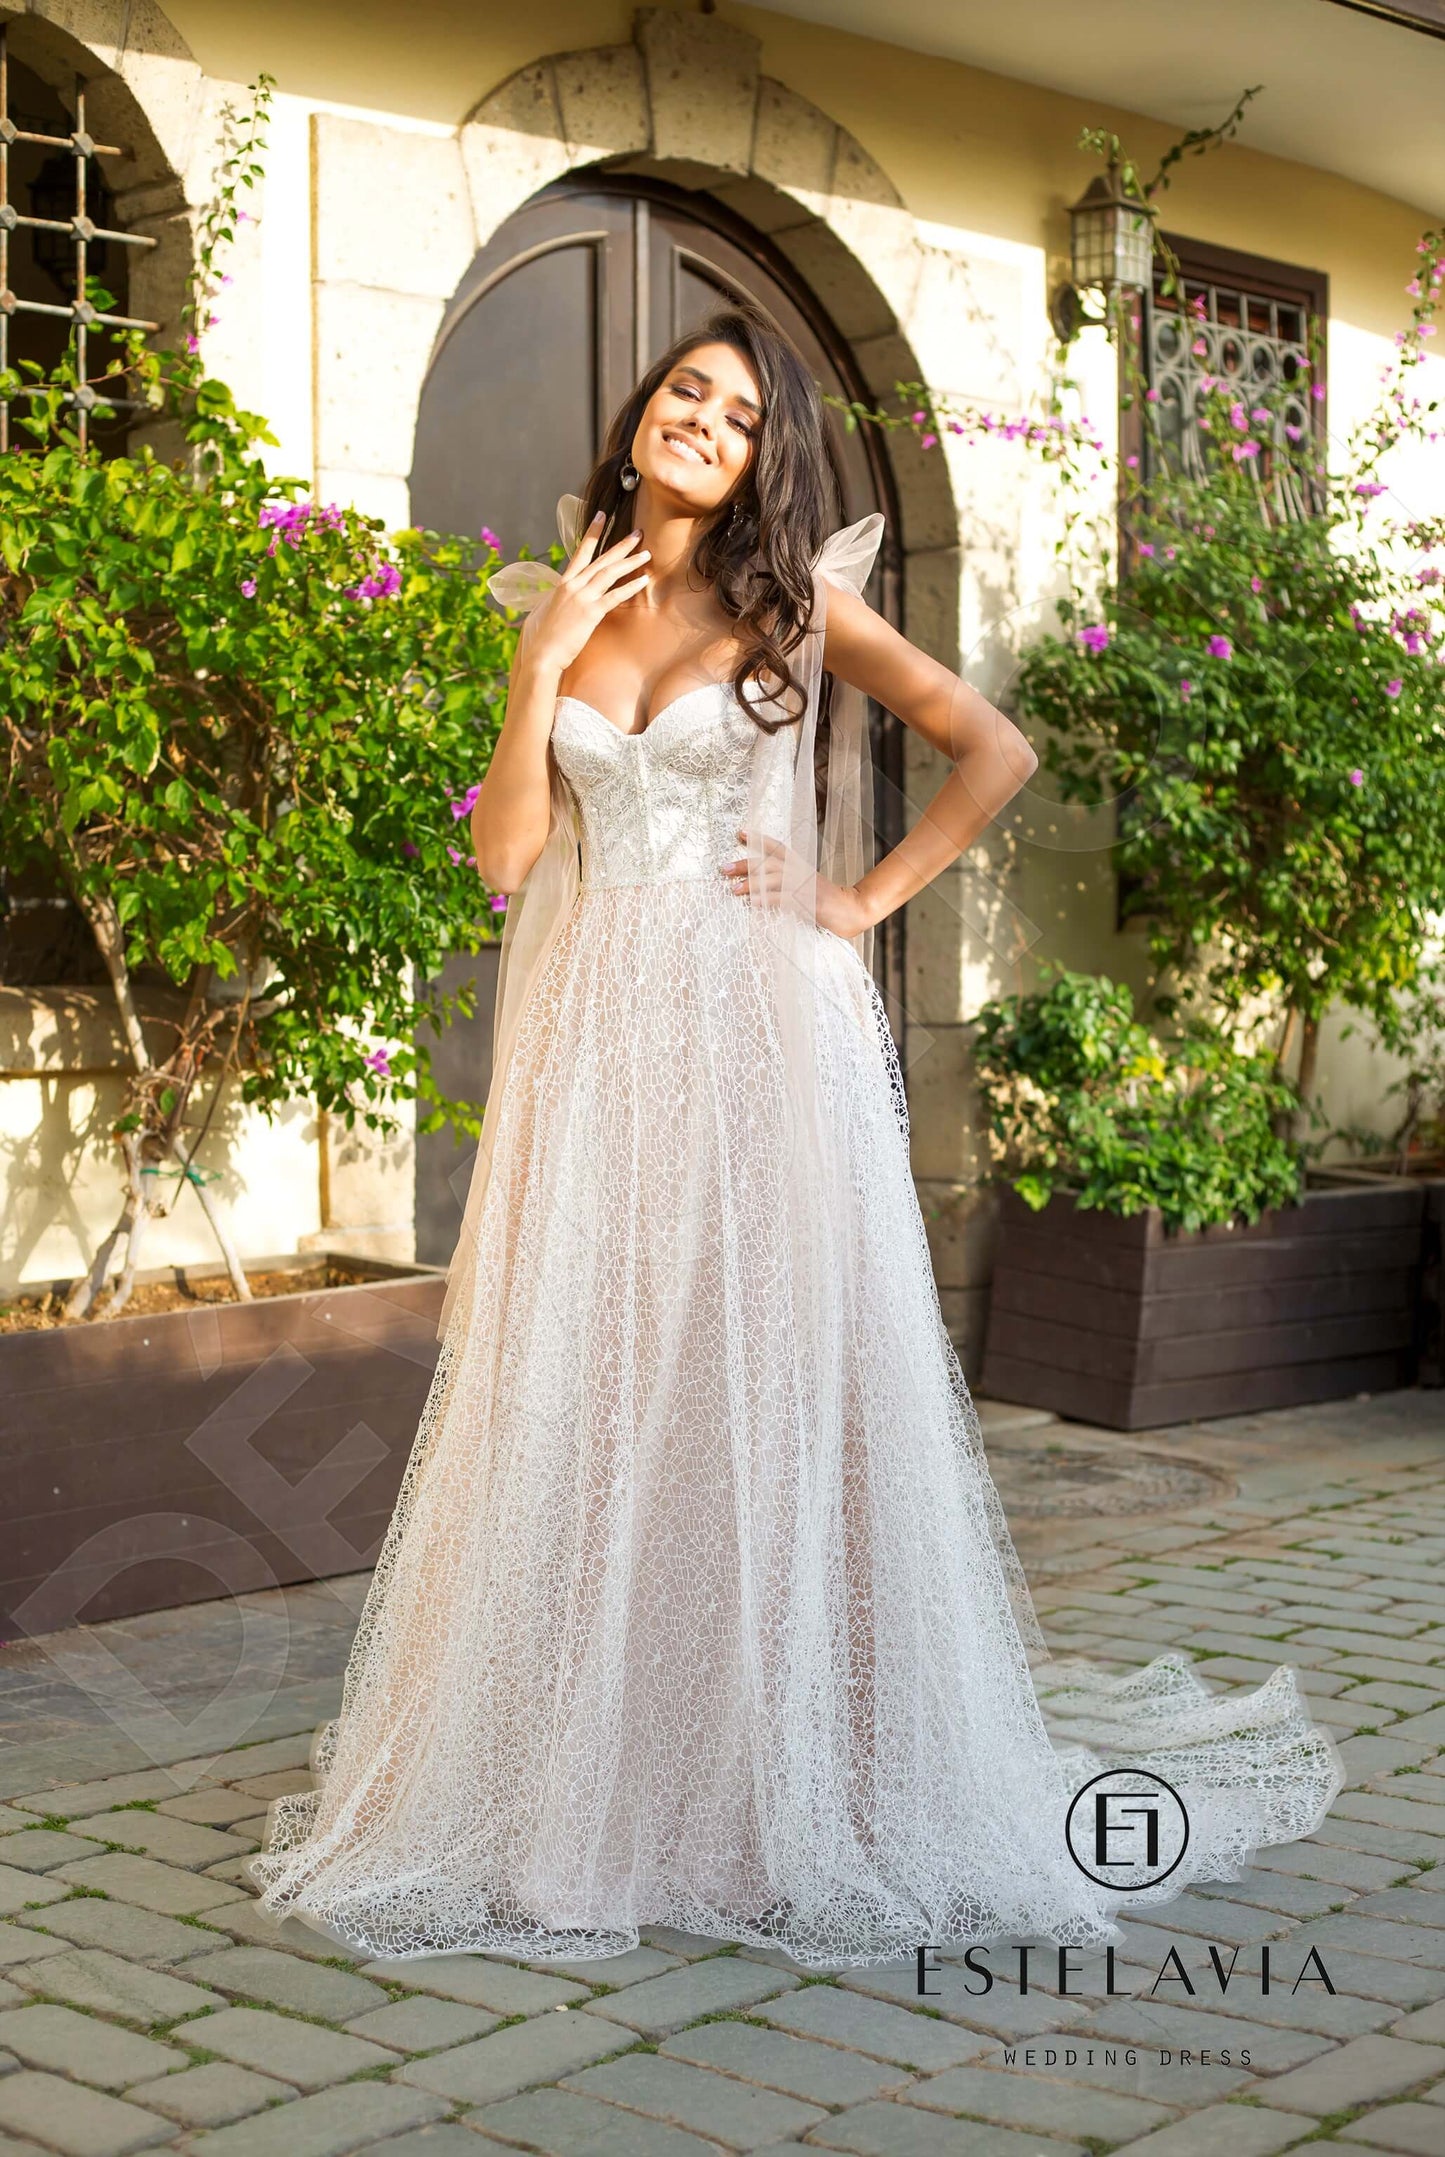 Paolina Open back A-line Straps Wedding Dress 6